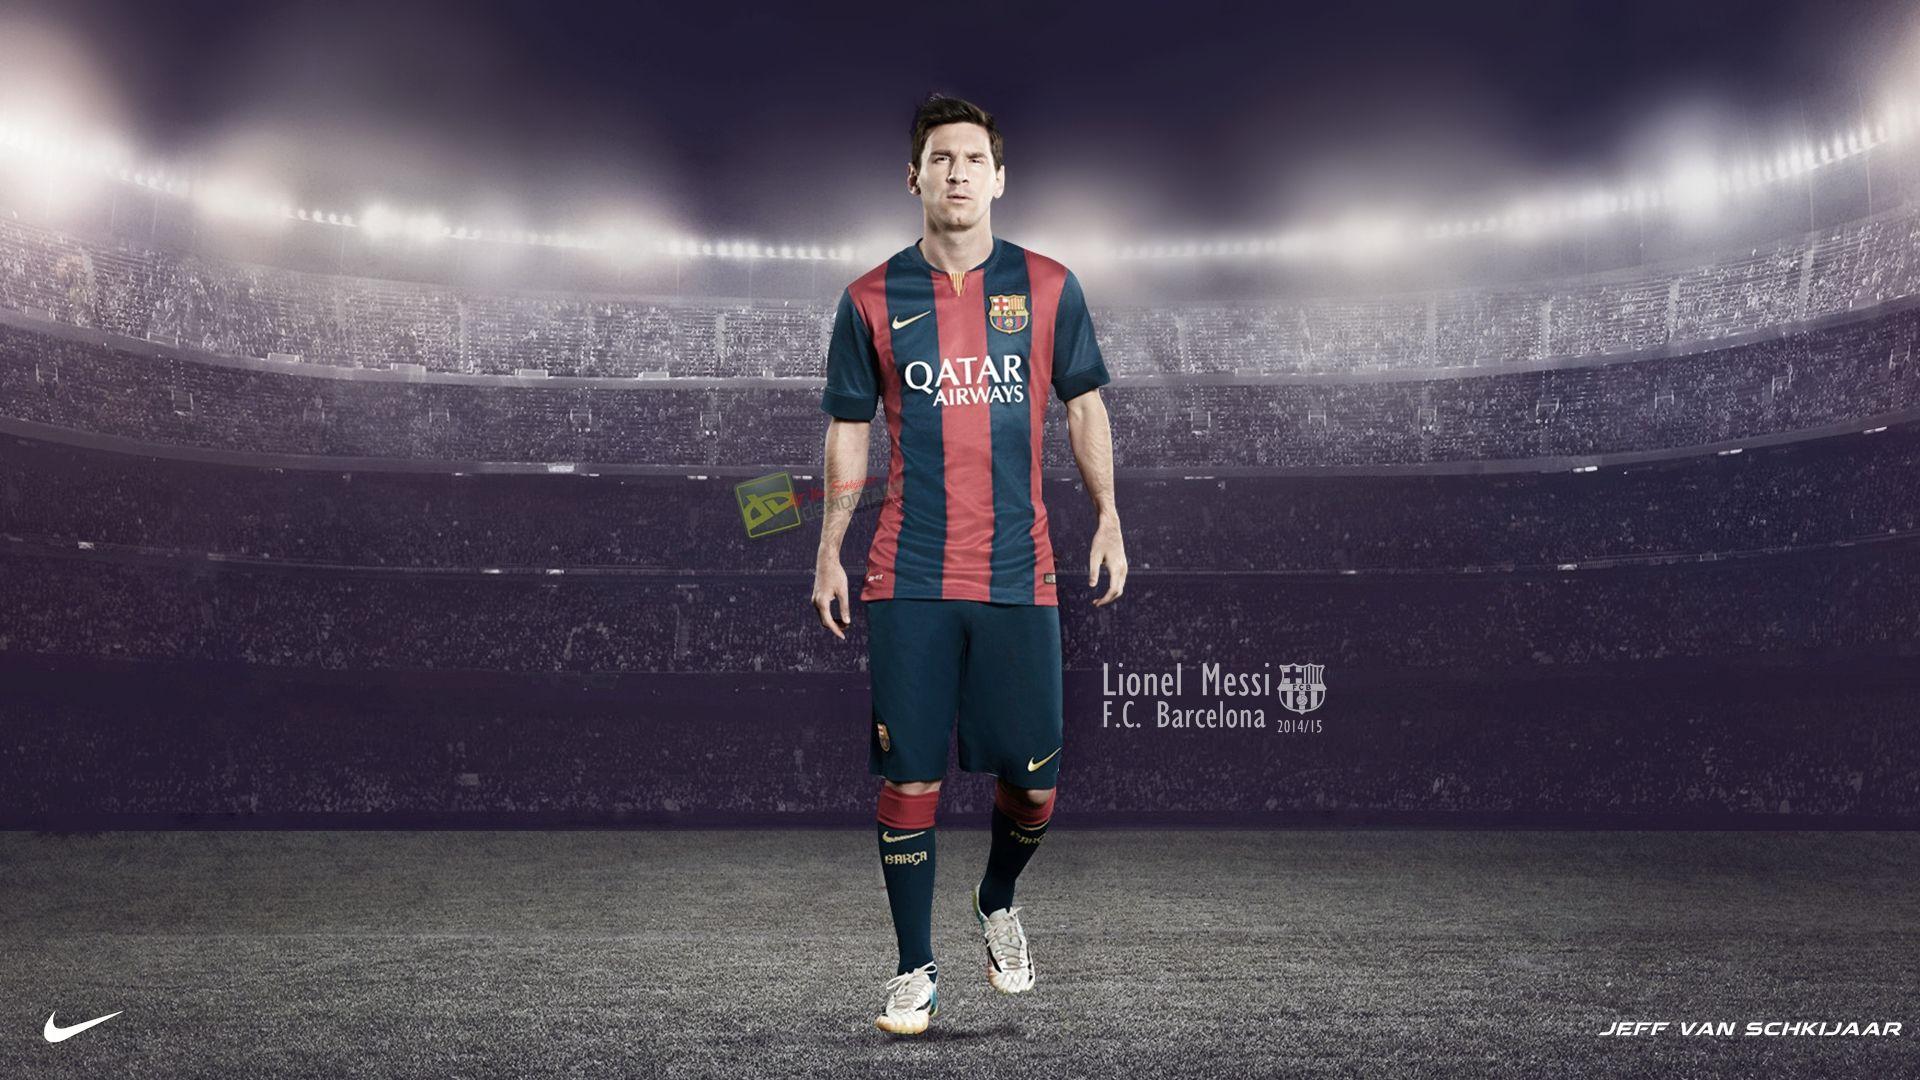 Messi In Stadium Wallpaper: Players, Teams, Leagues Wallpaper